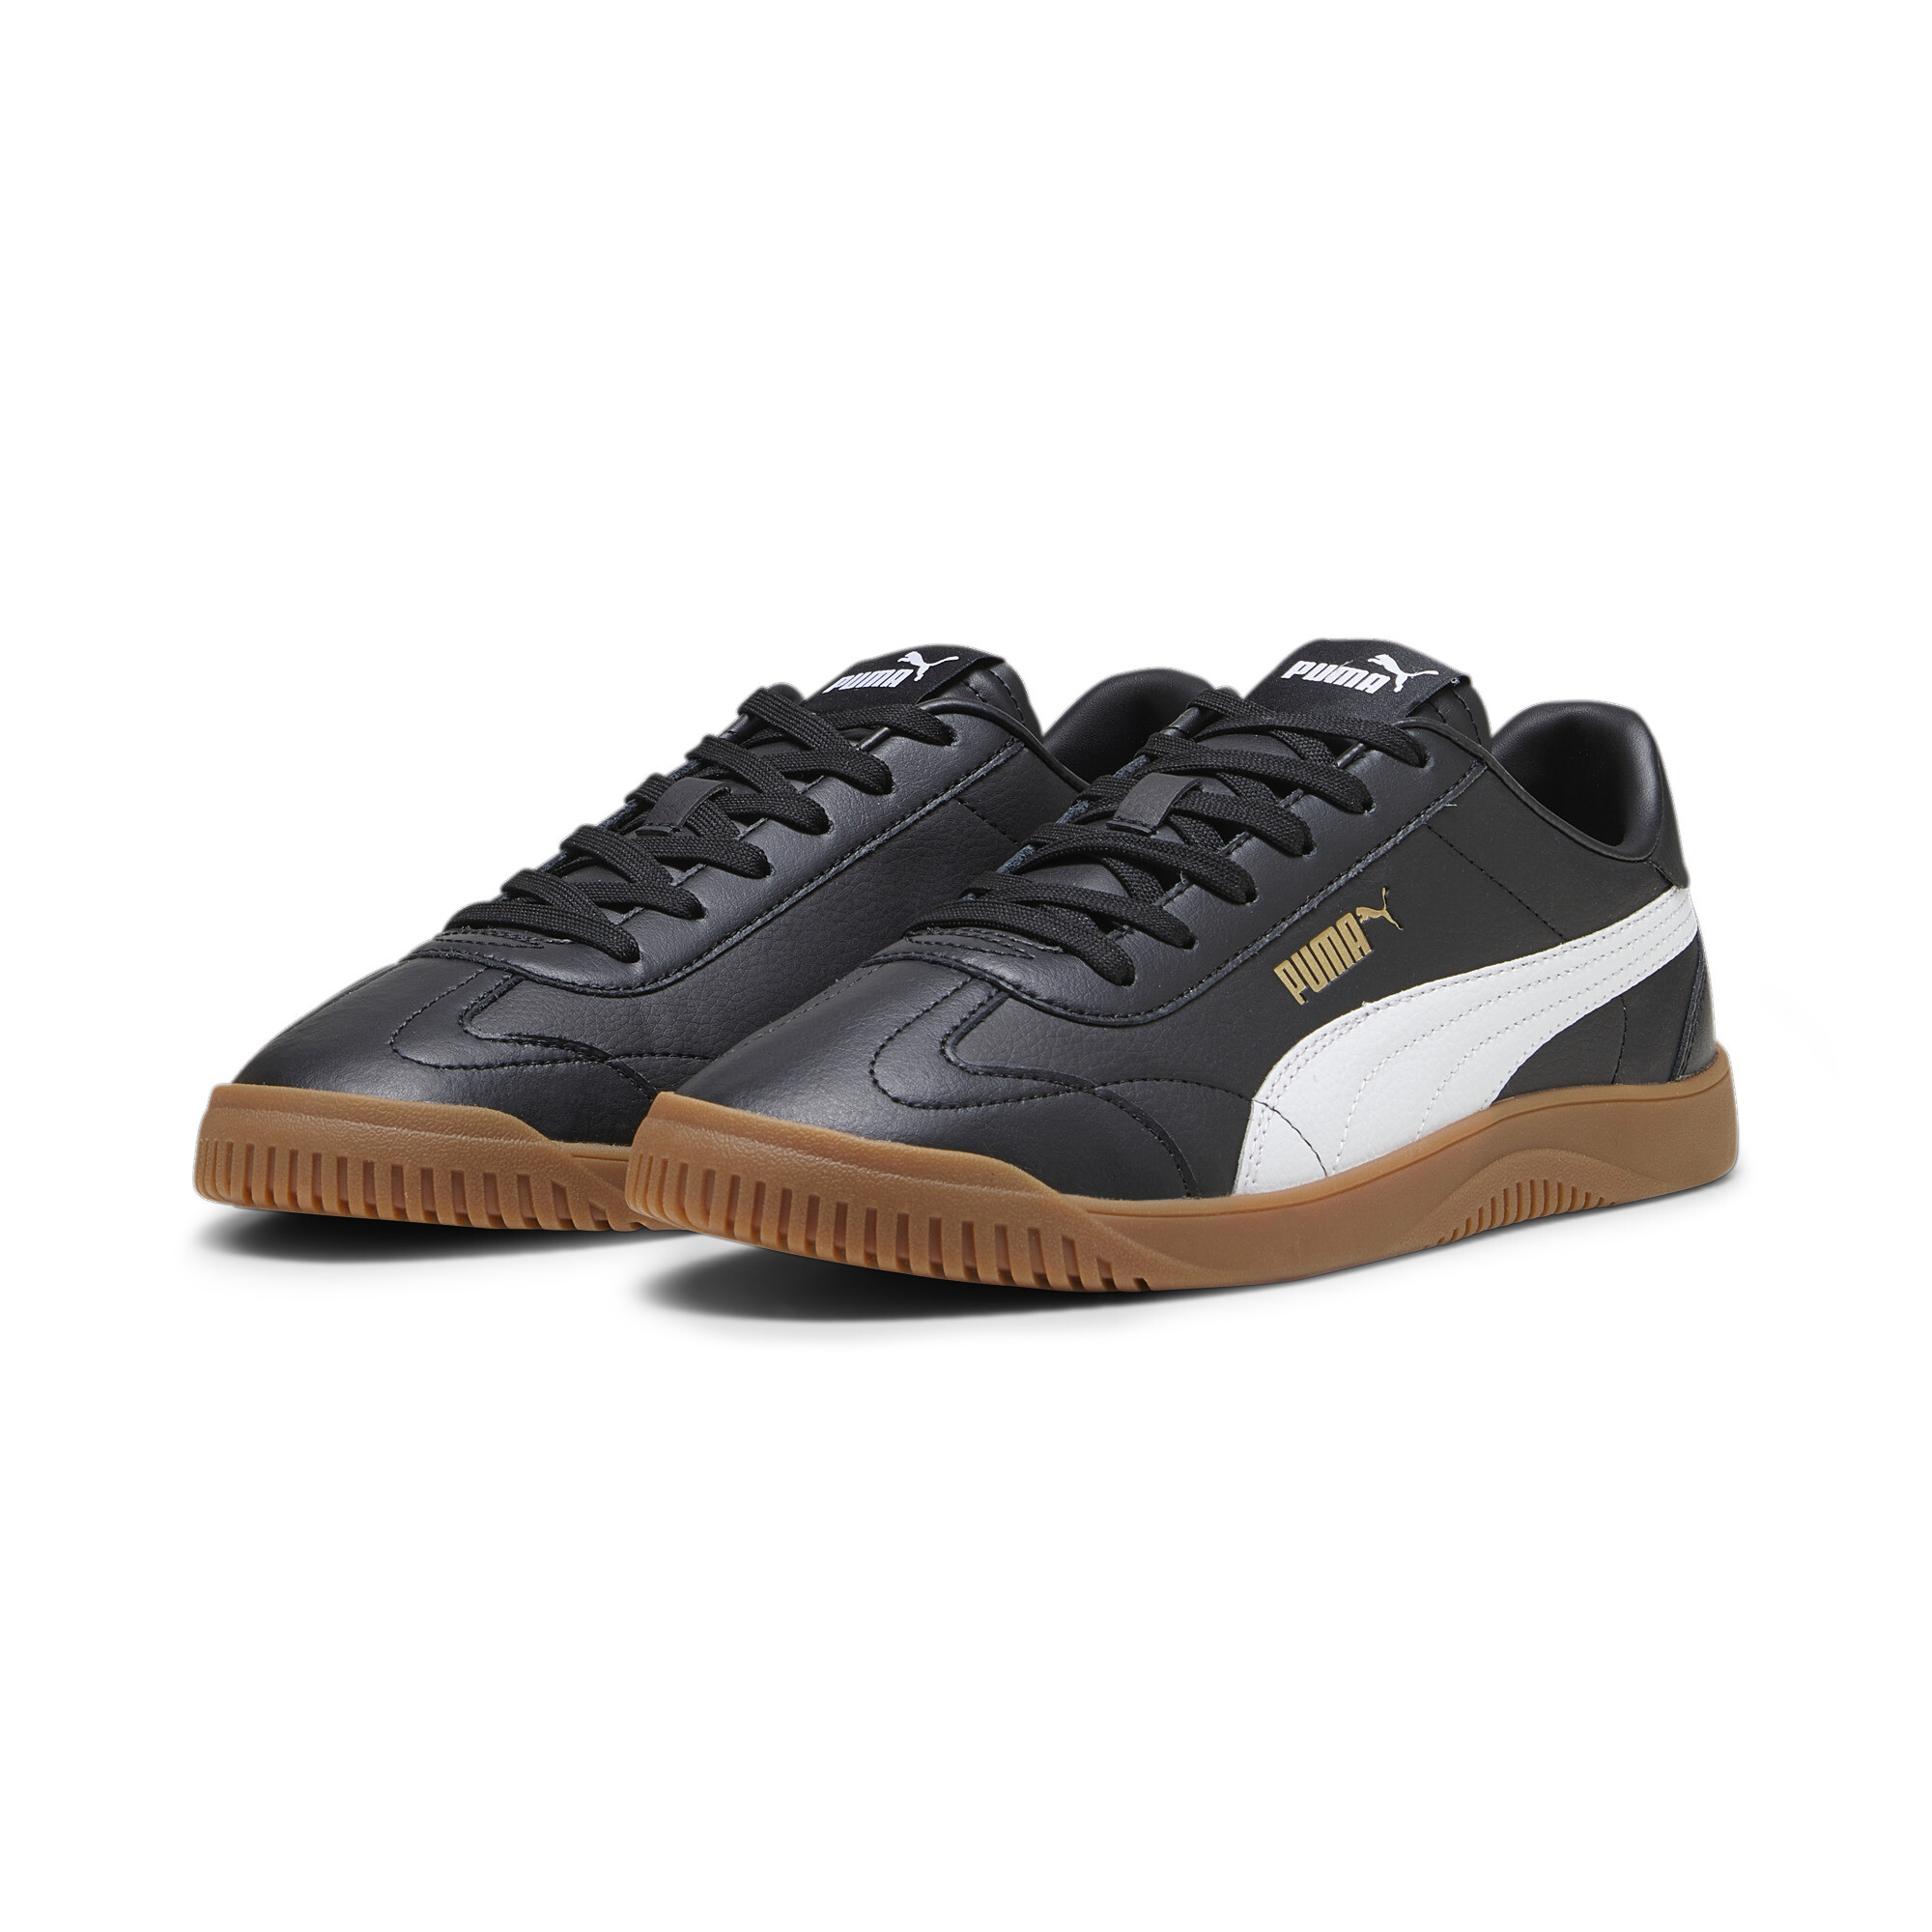 Puma Club 5v5 Sneakers, Black, Size 40.5, Shoes